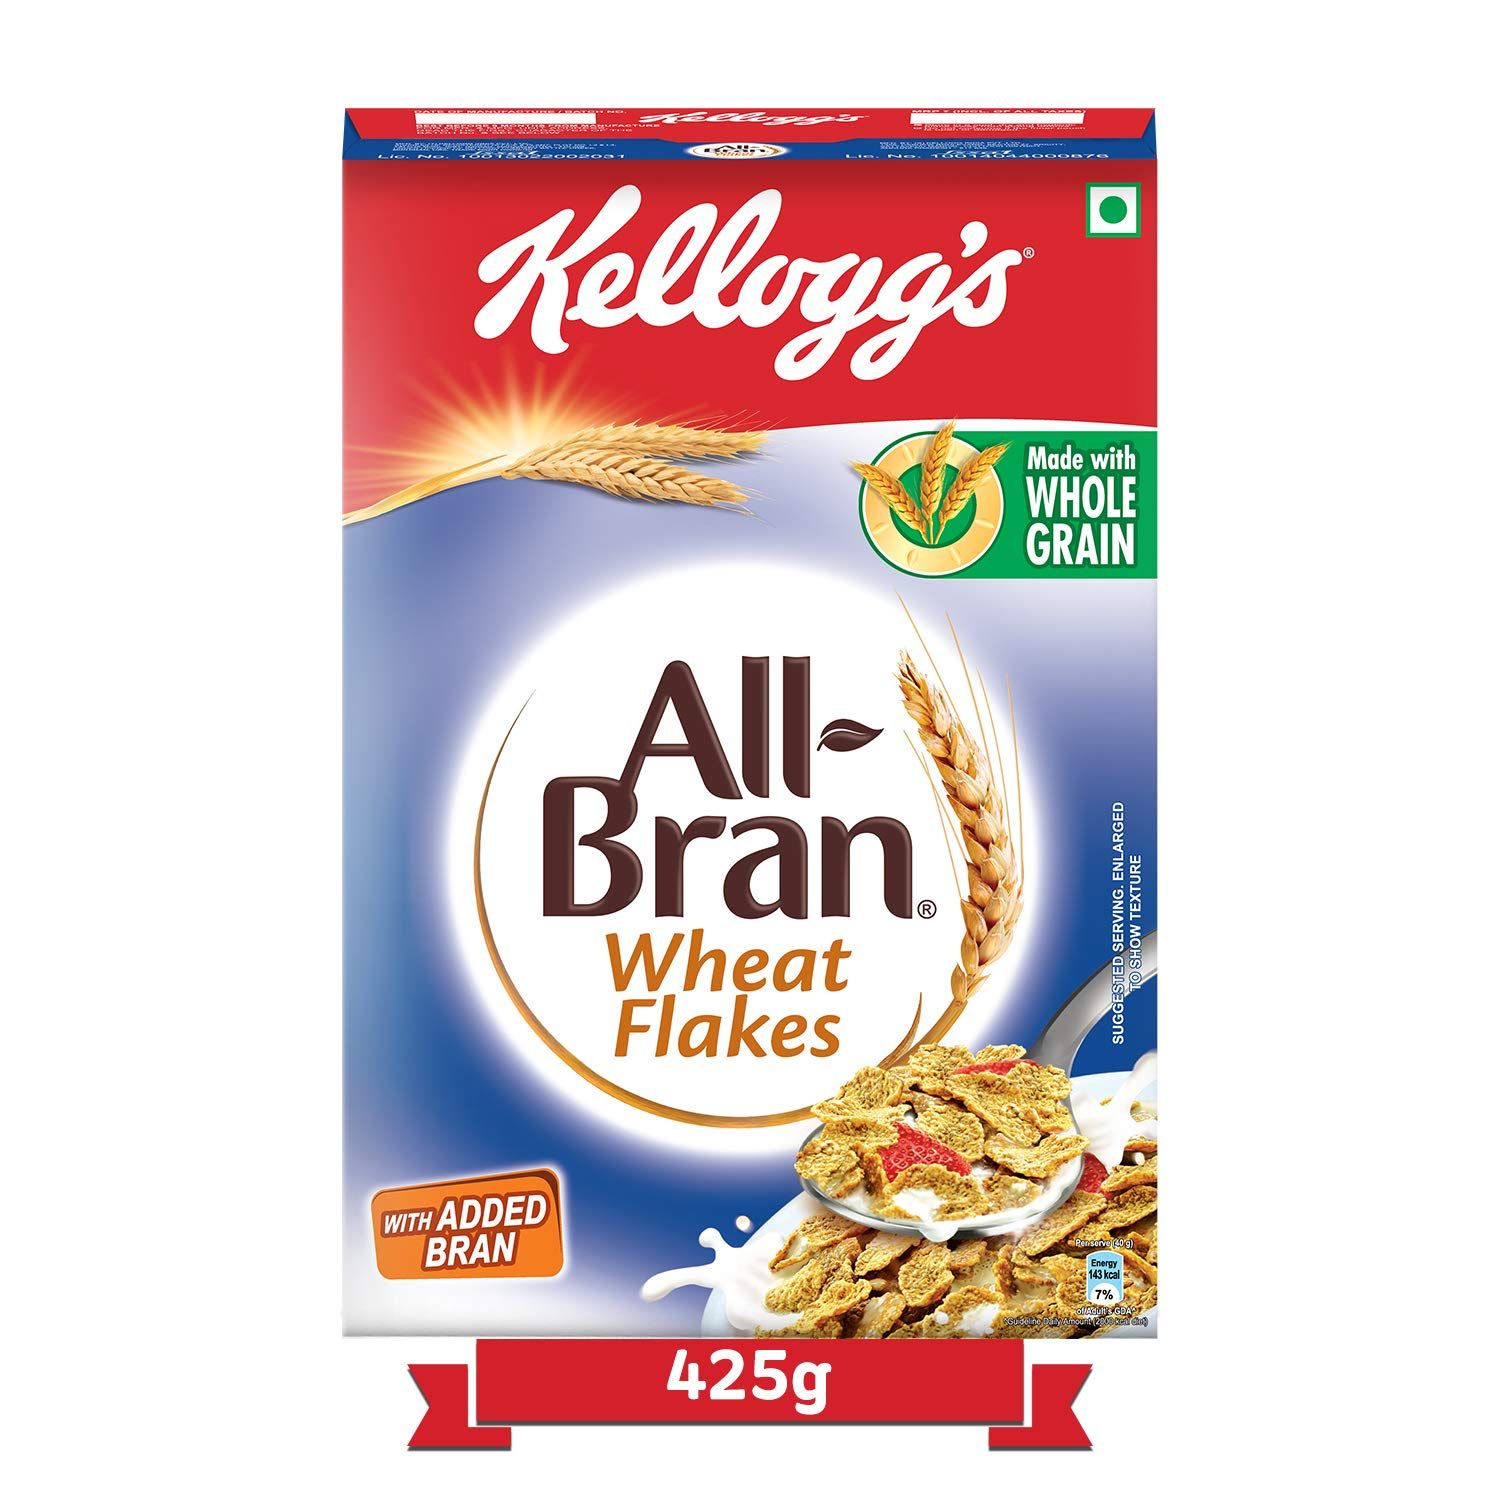 Kellogg's All Bran Wheat Flakes Image